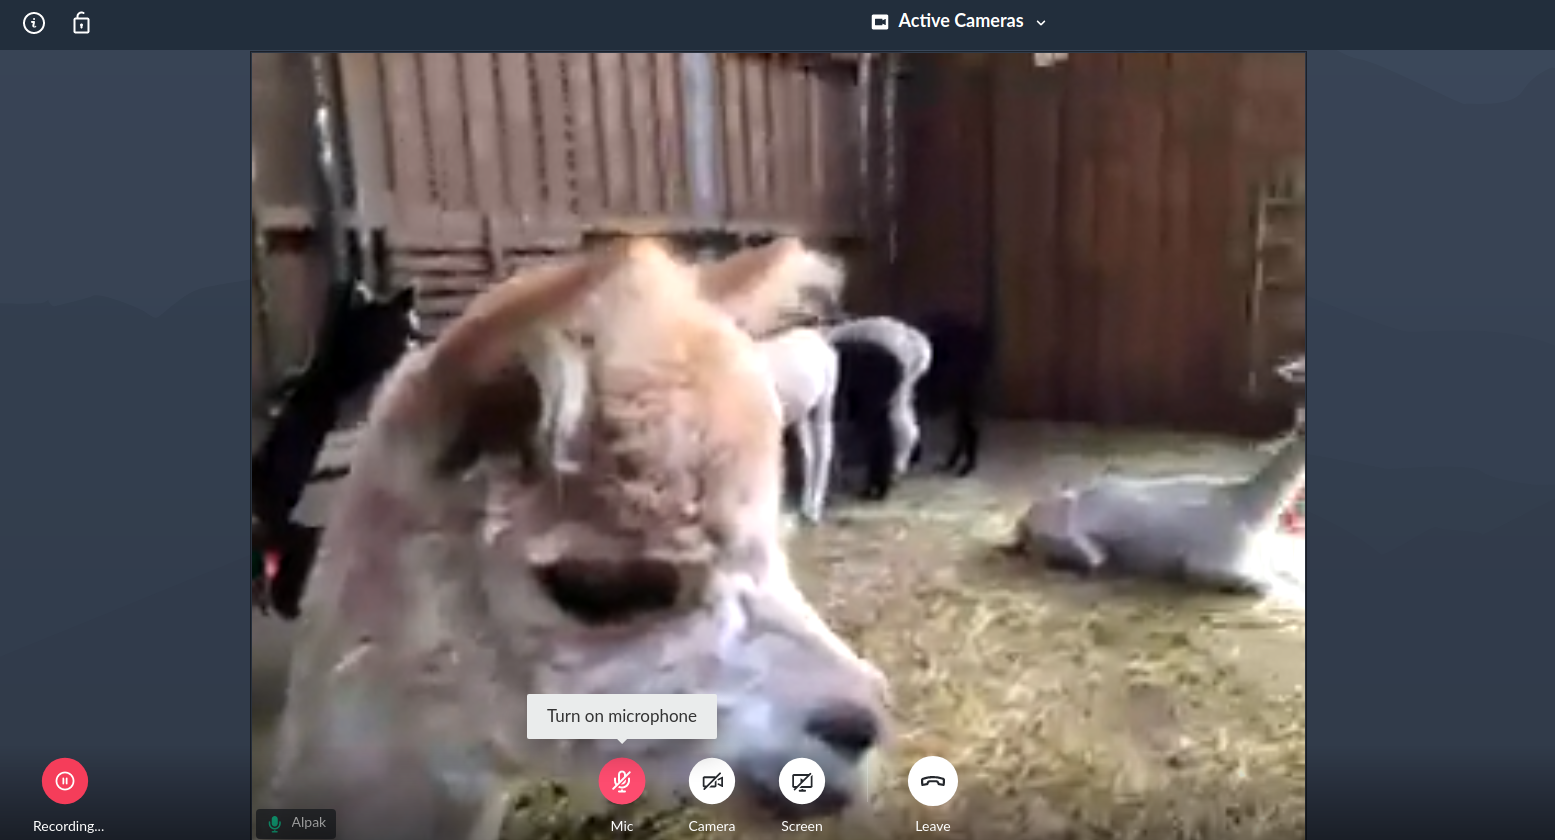 An alpaca joining a gotomeeting call